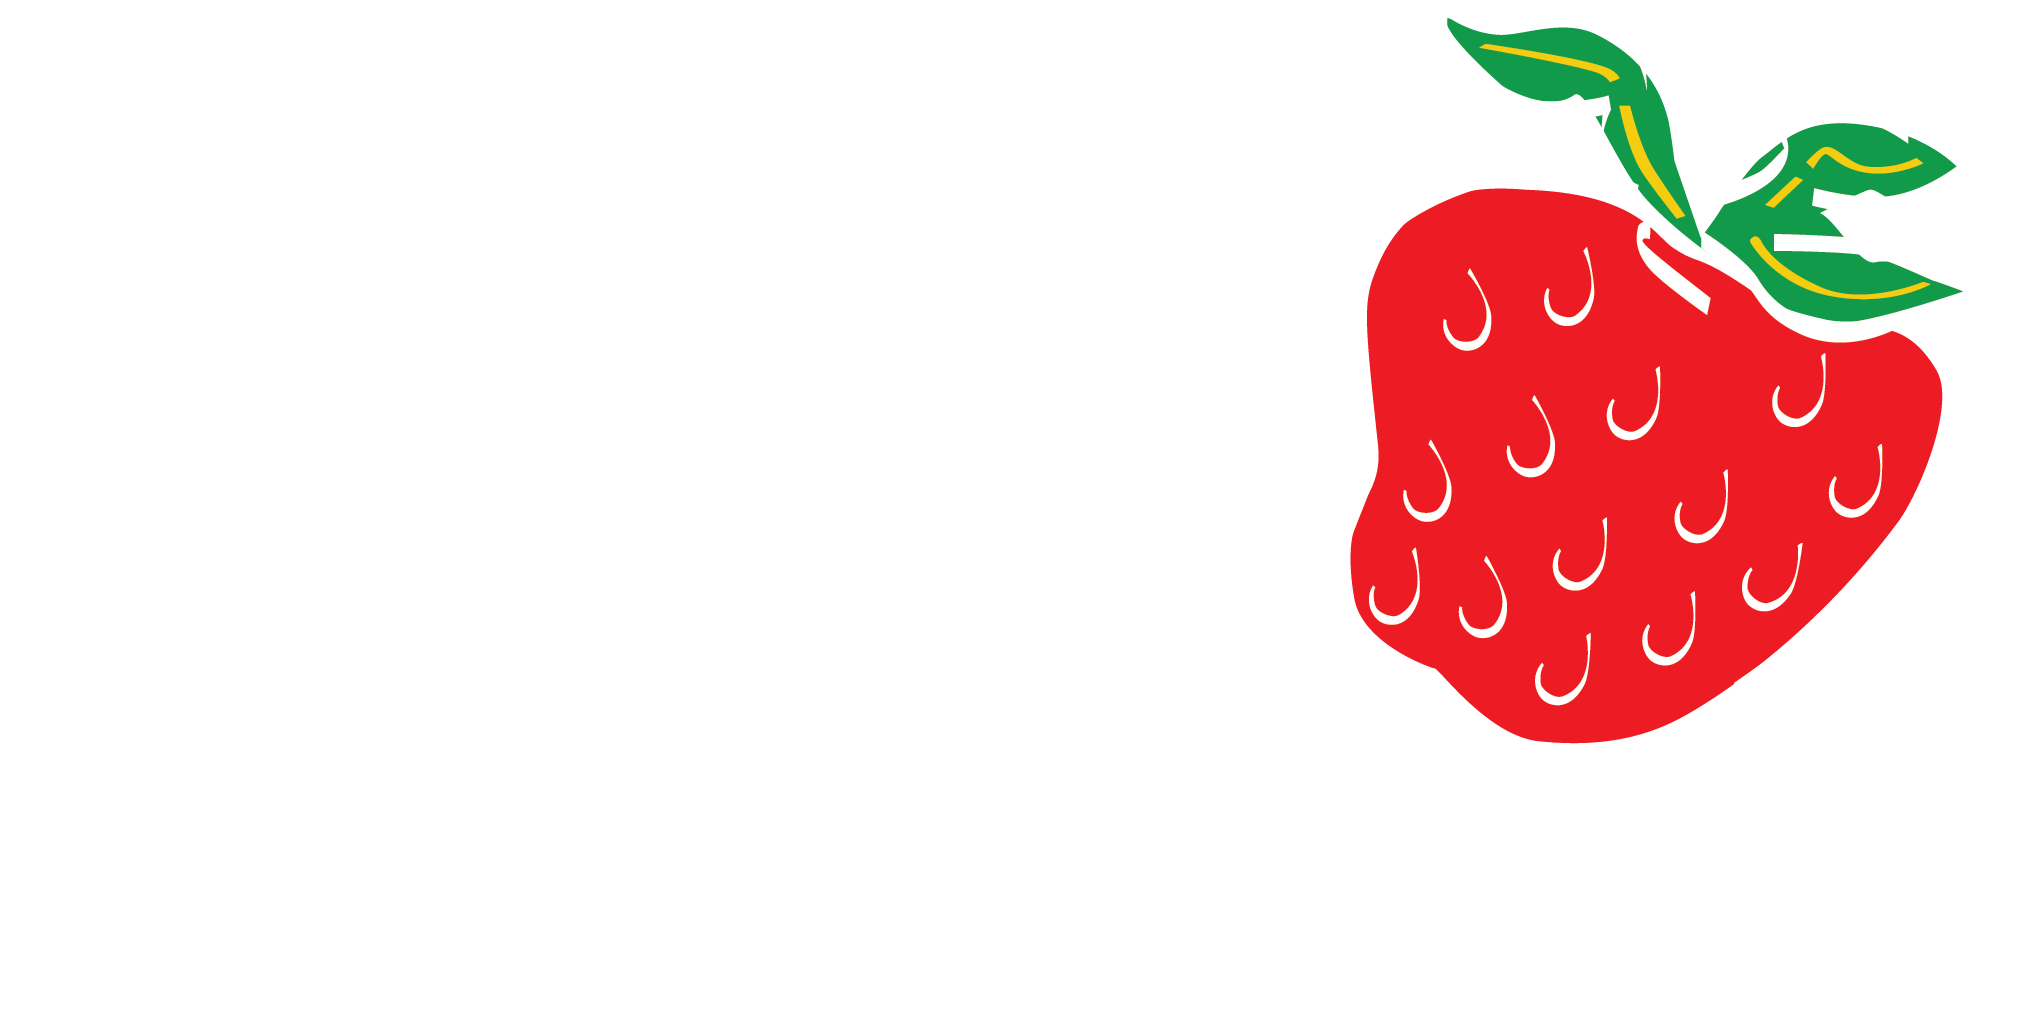 Stacy Family Farm